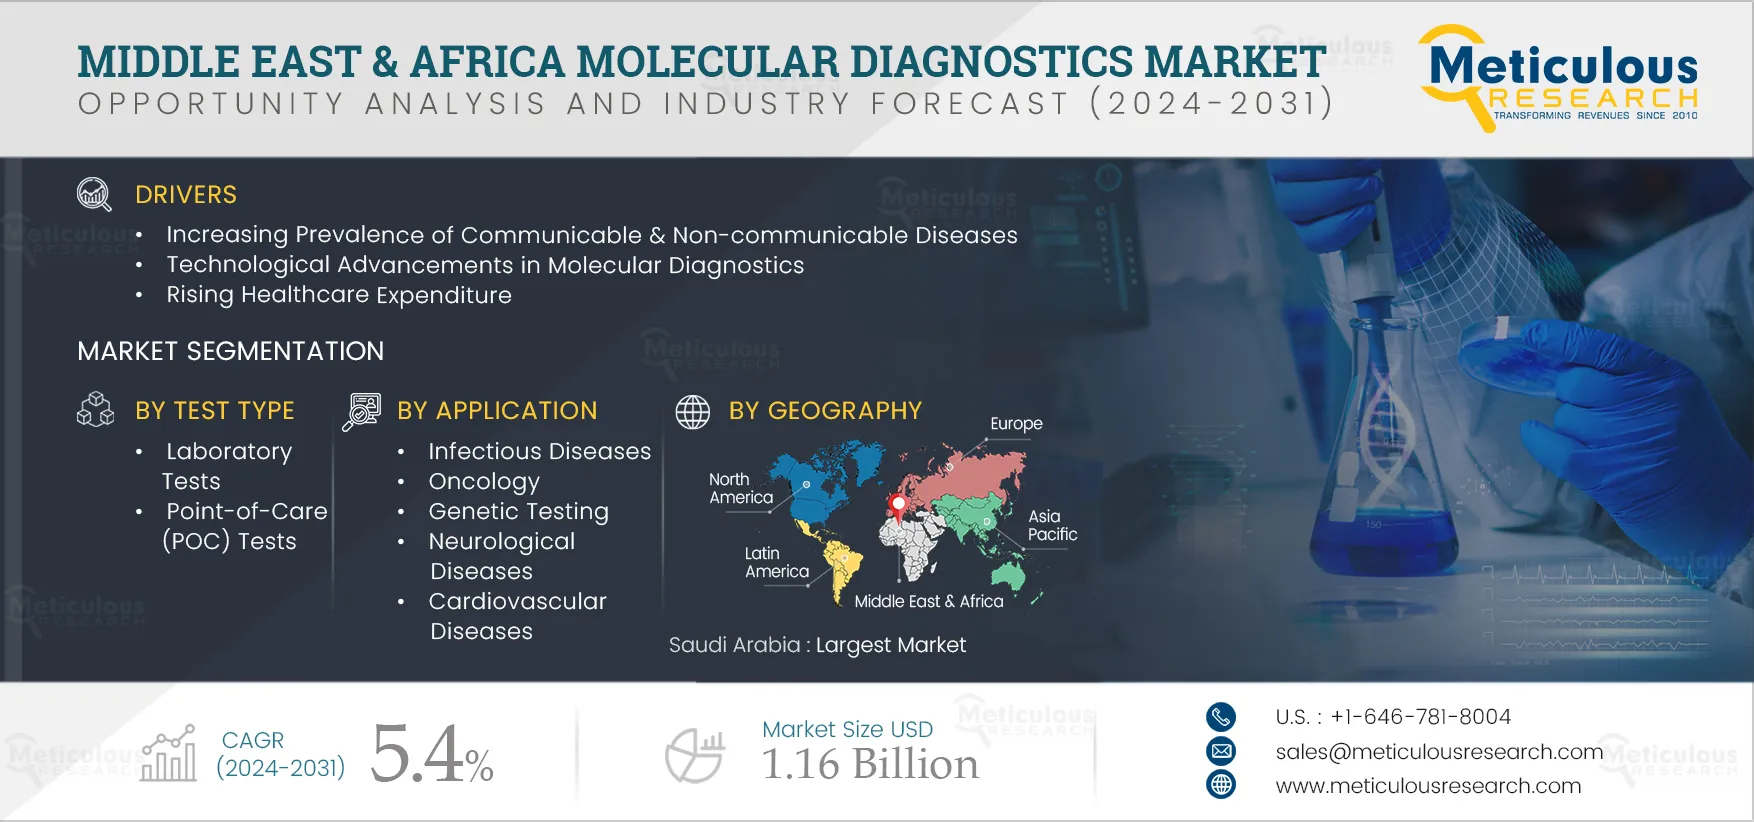 Middle East & Africa Molecular Diagnostics Market